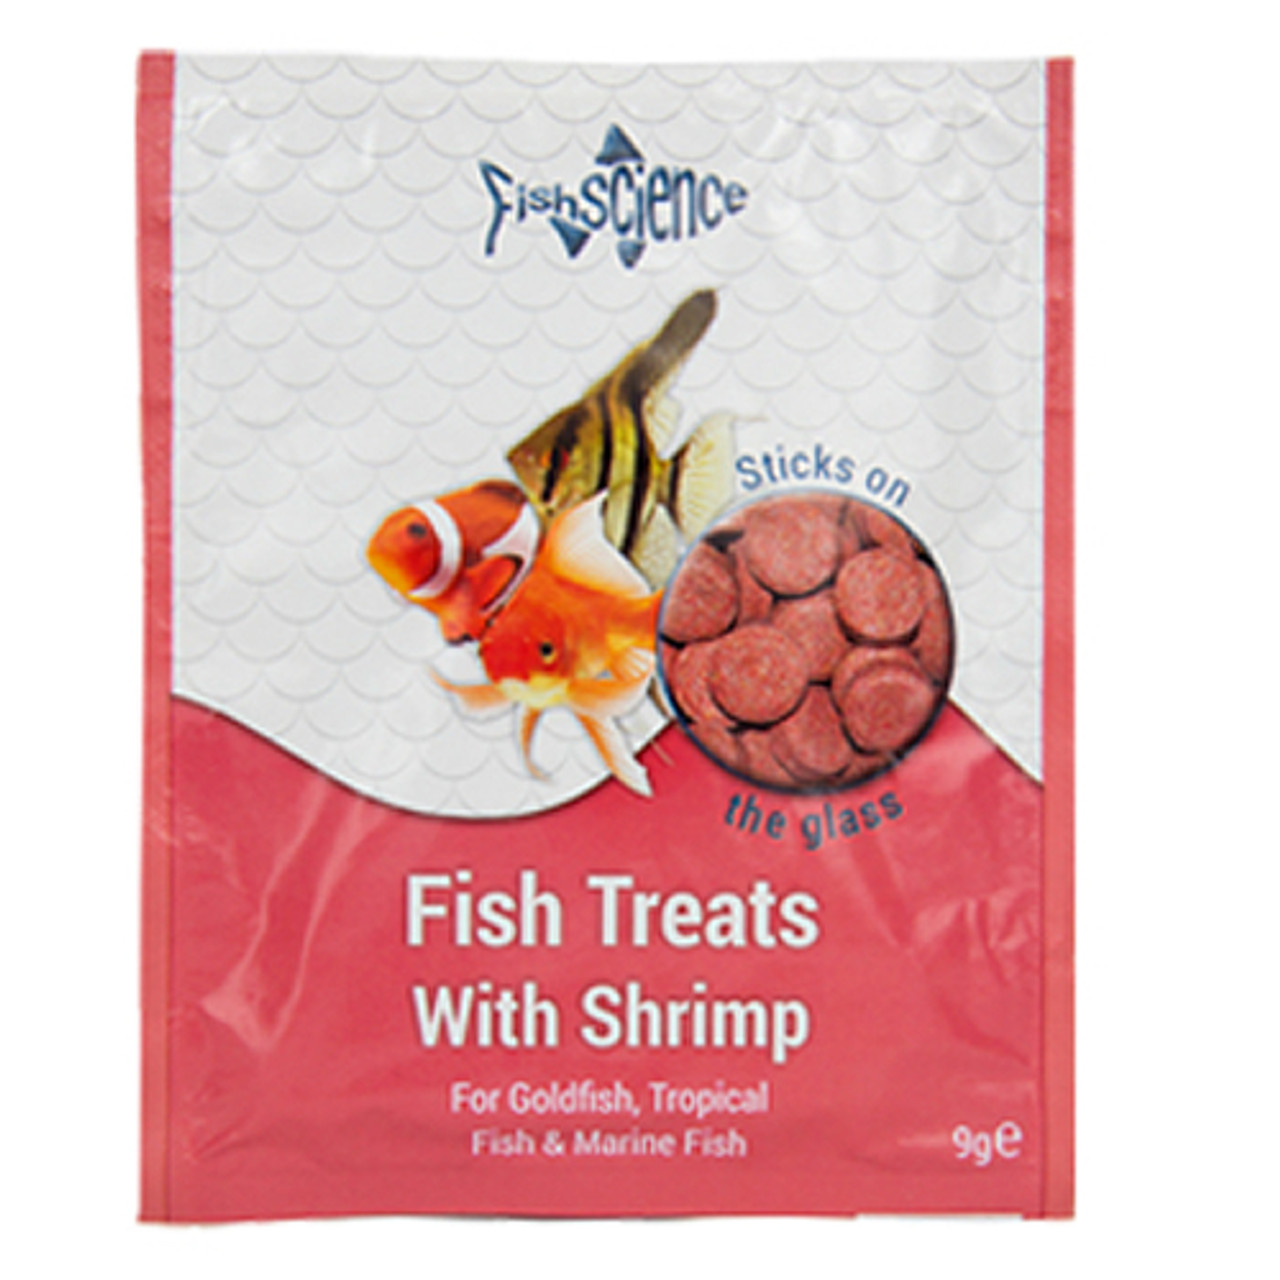 Fish Science Treats With Shrimp 9g Sachet 25 pack